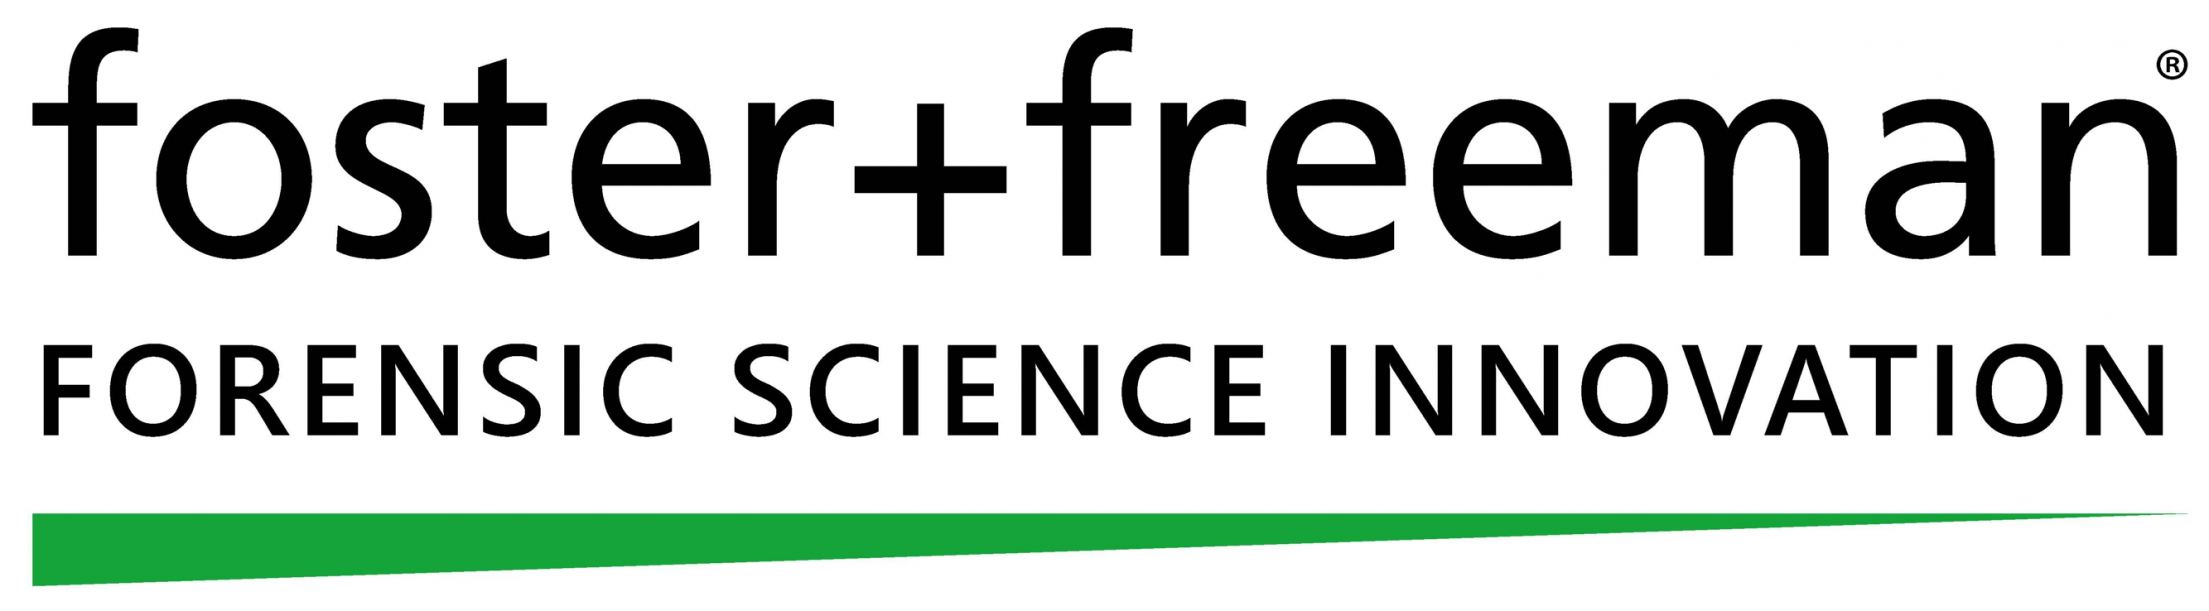 FosterFreeman Logo